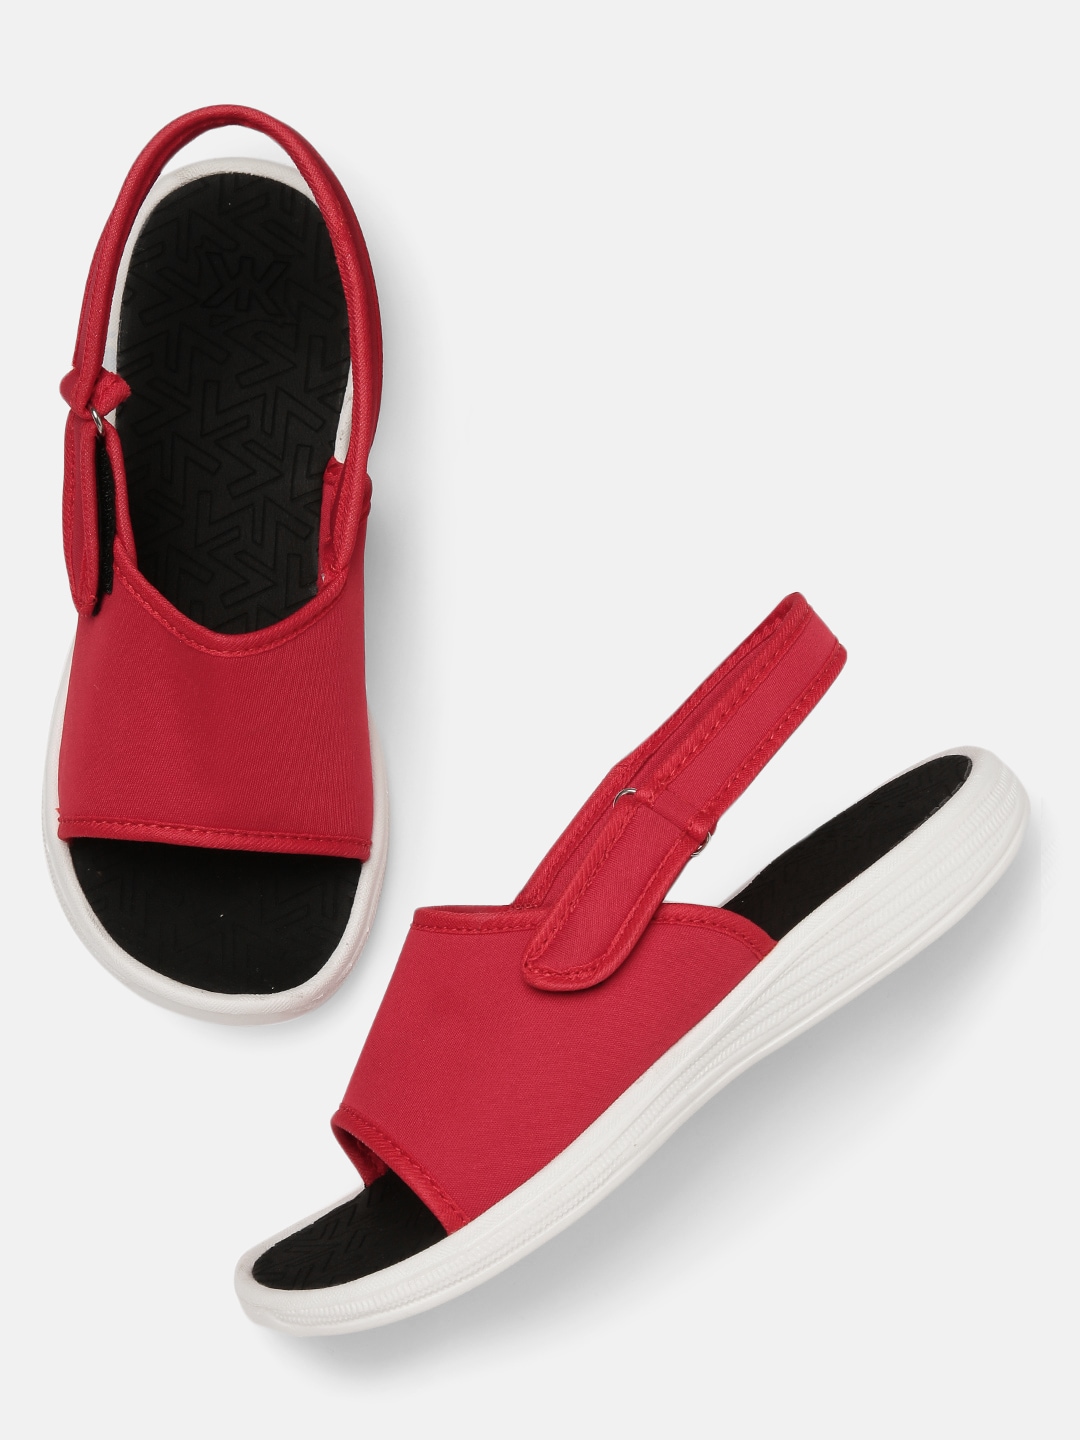 Kook N Keech Women Red & Black Solid Sports Sandals Price in India